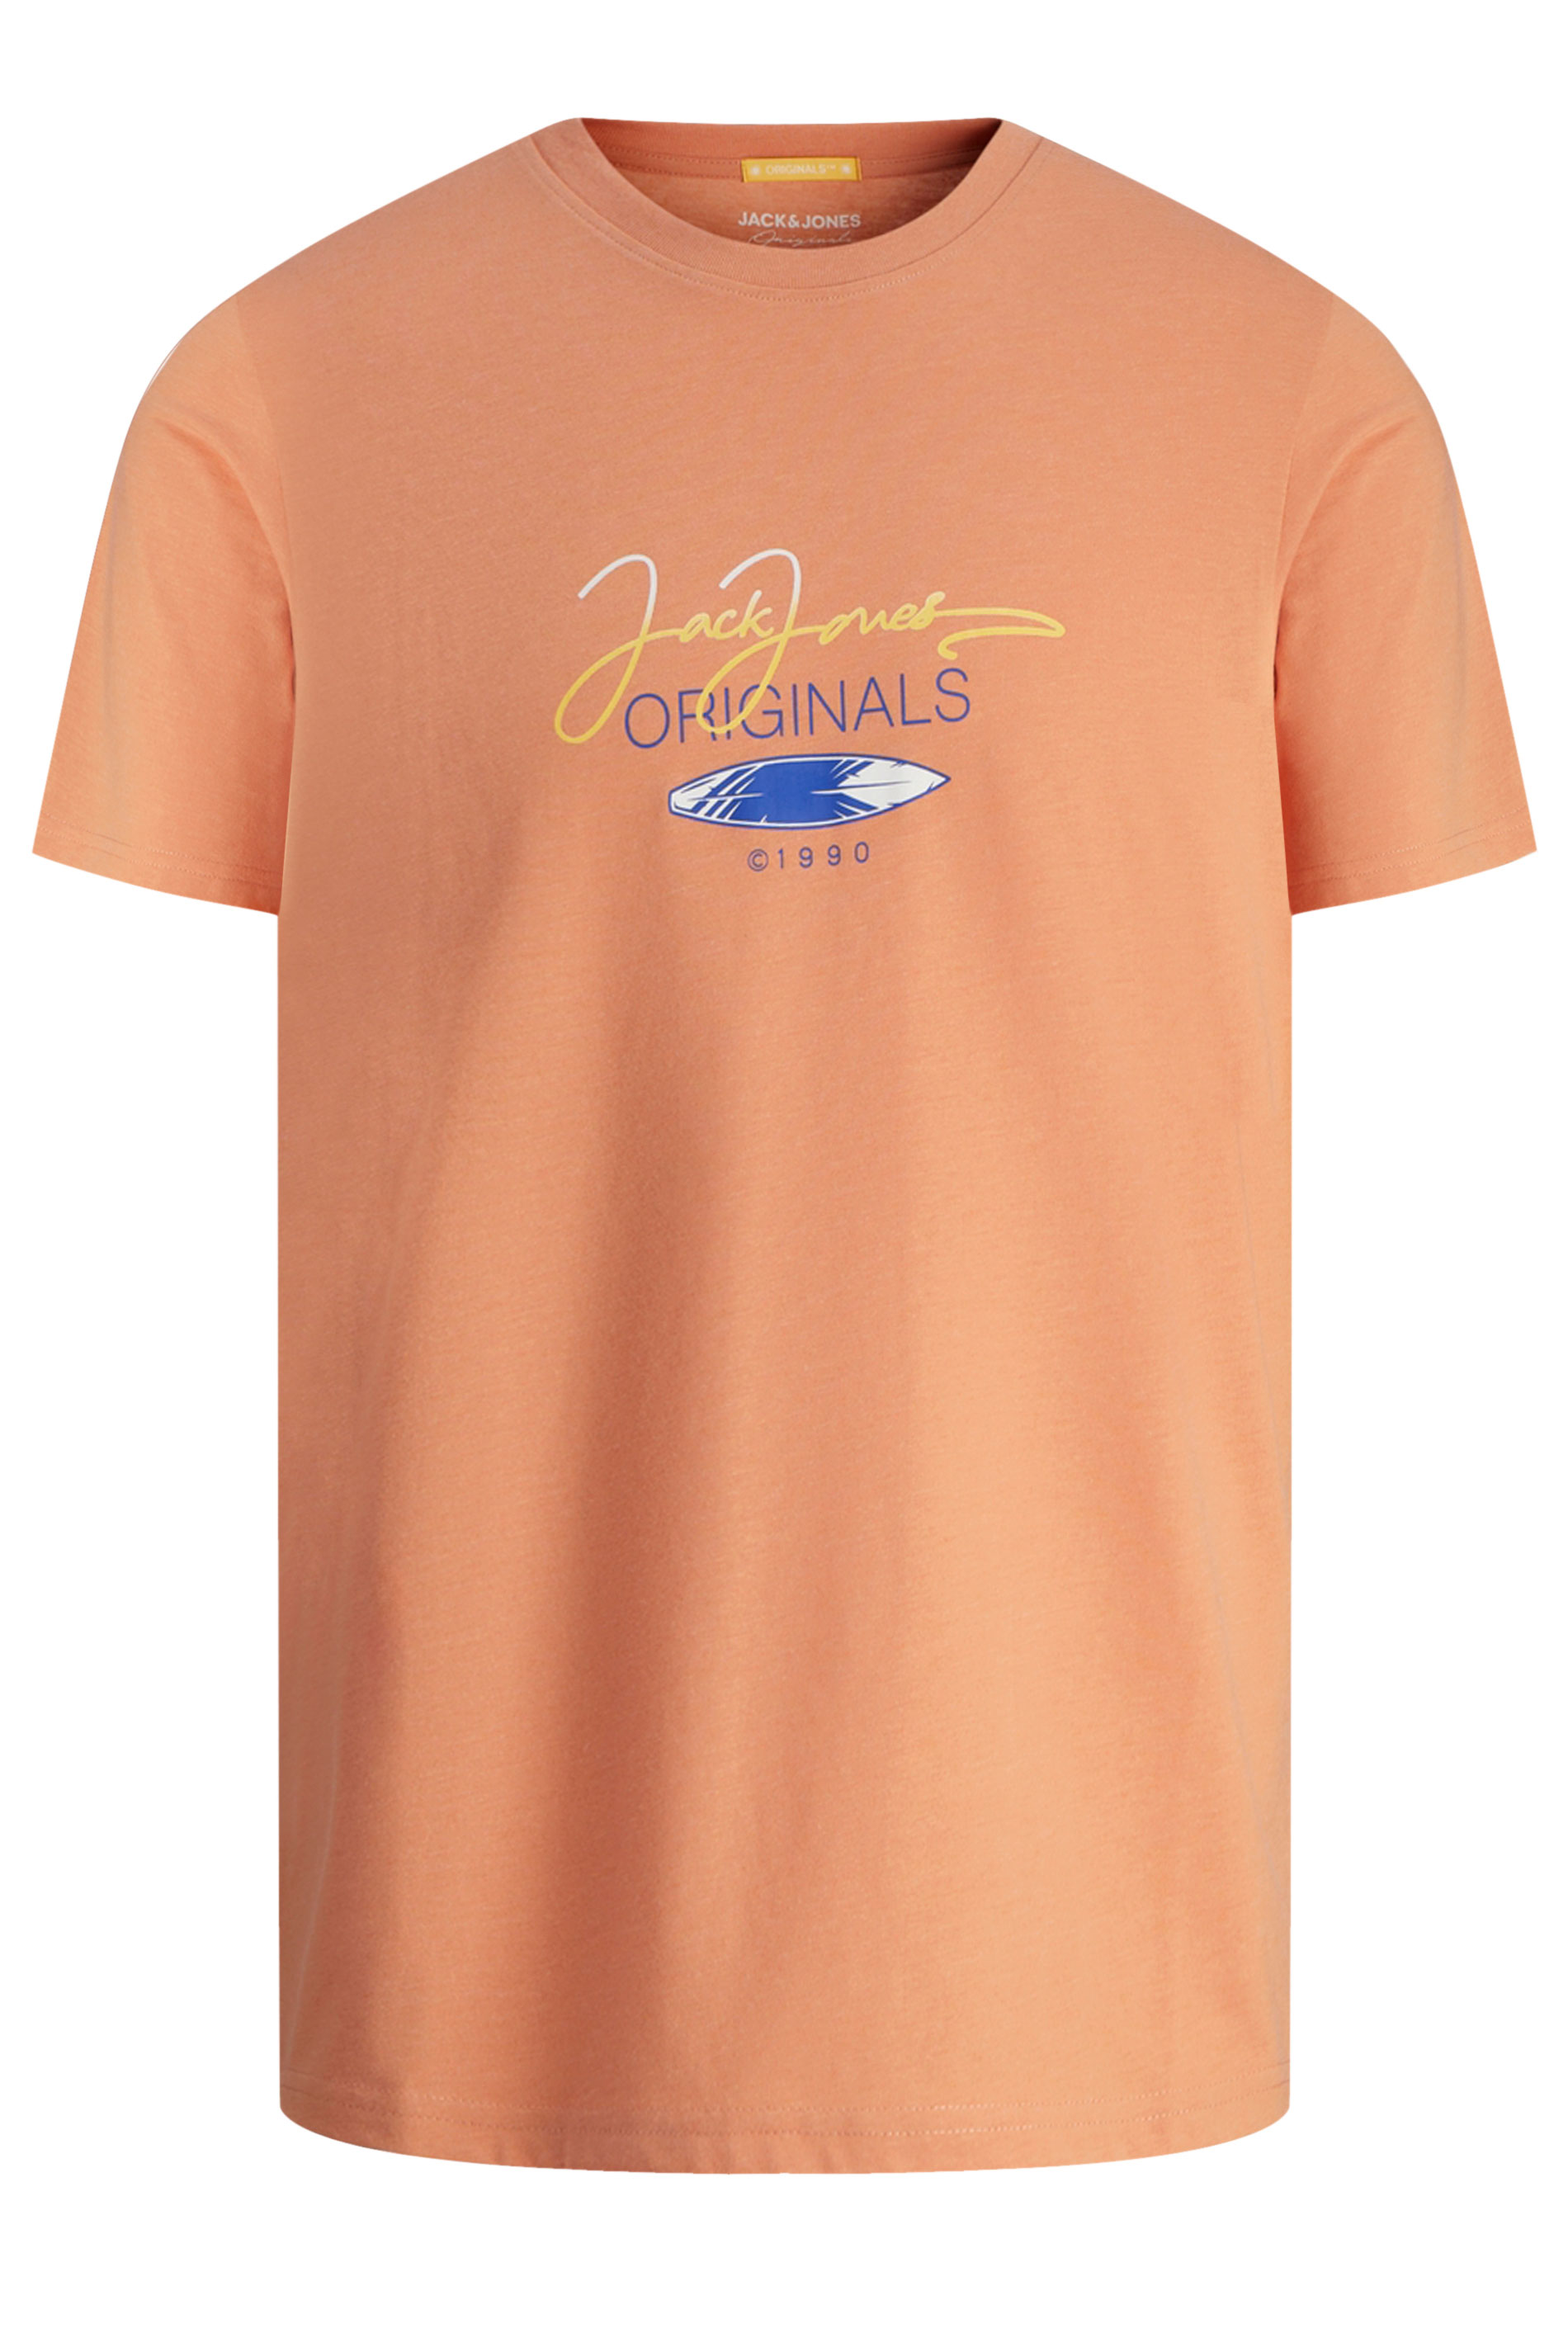 JACK & JONES Big & Tall Orange Palm Tree Print 'Originals' T-Shirt | BadRhino 2